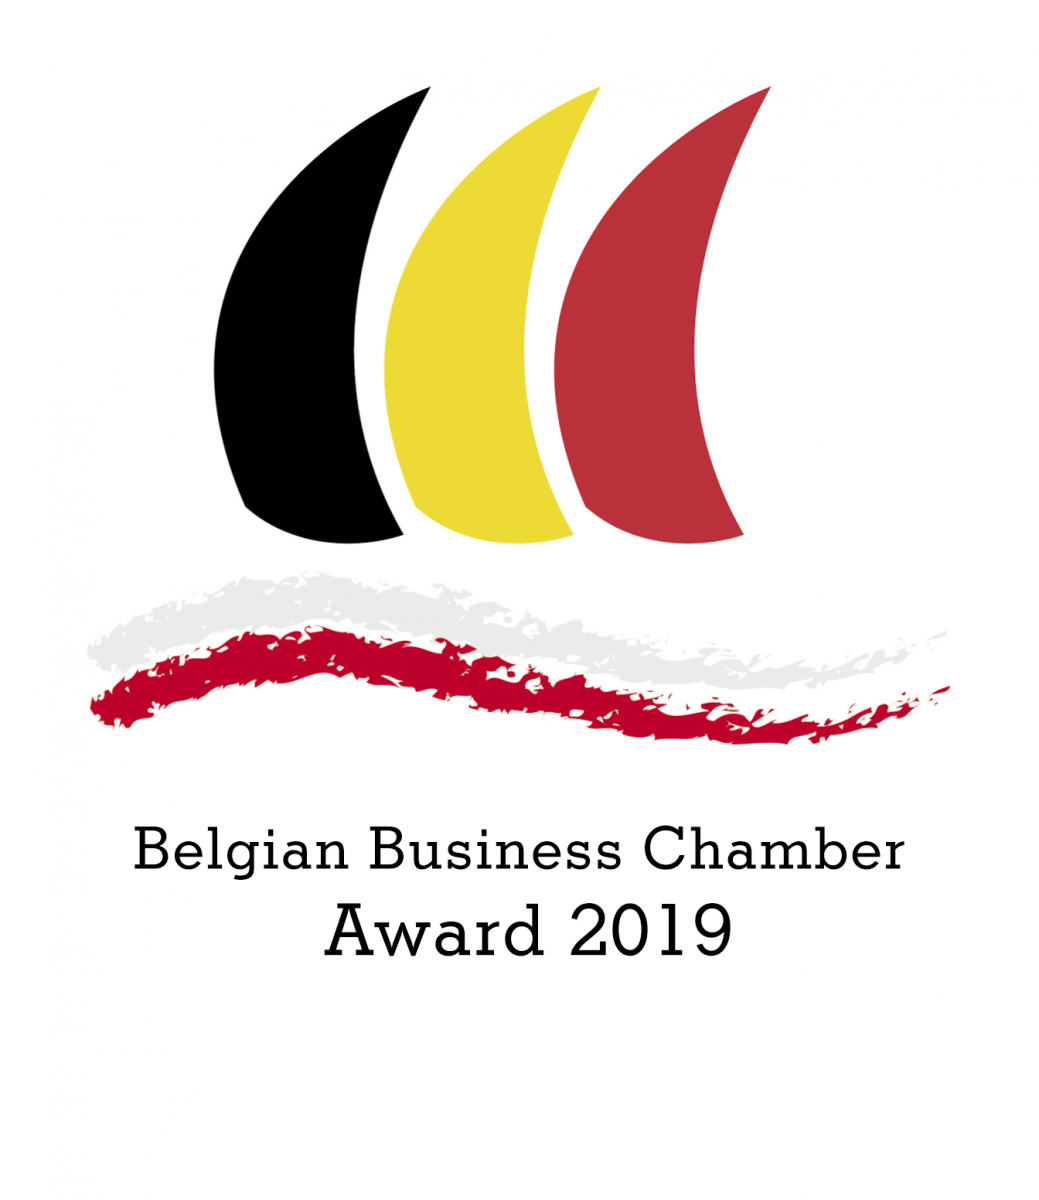 BELGIAN DAYS 2019: Belgian Business Chamber Award 2019